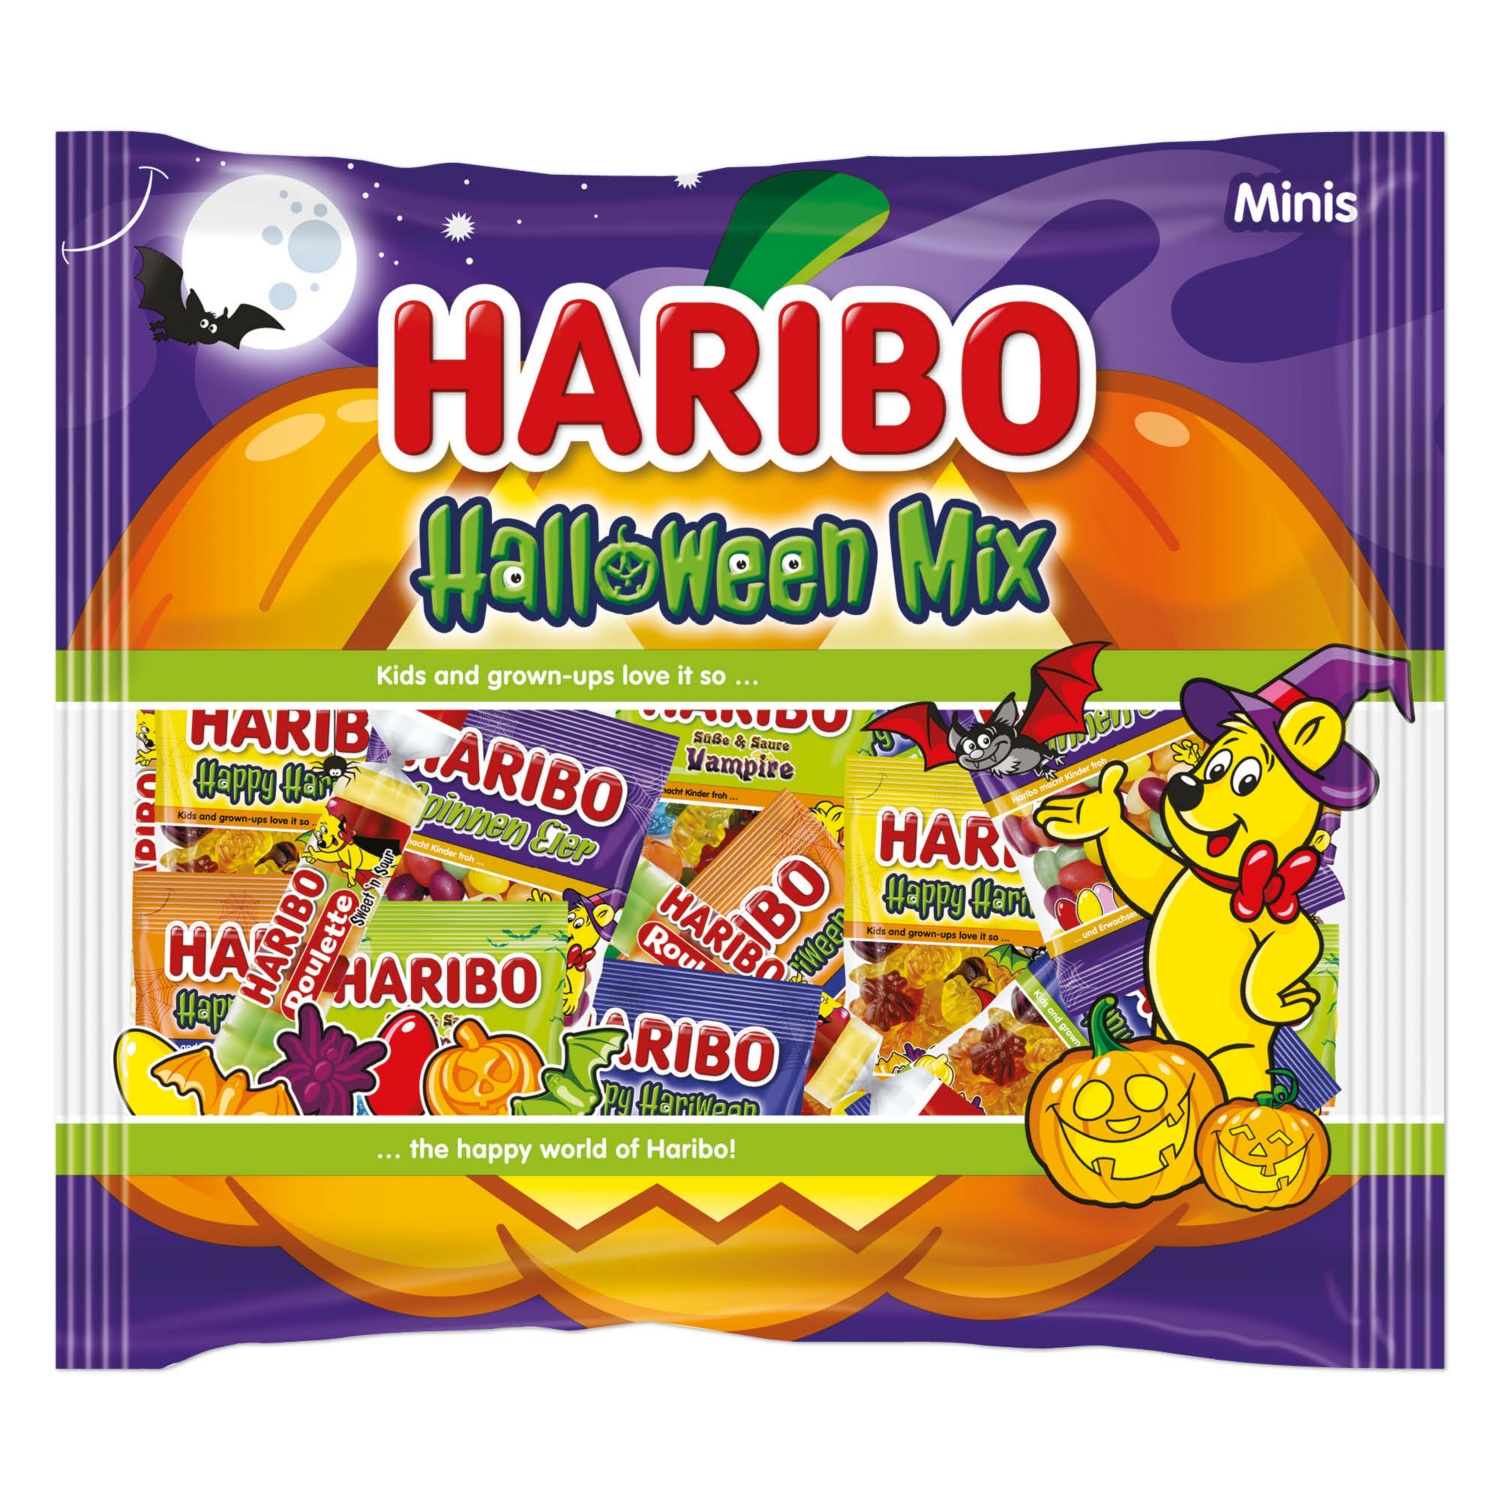 HARIBO Halloween Mix